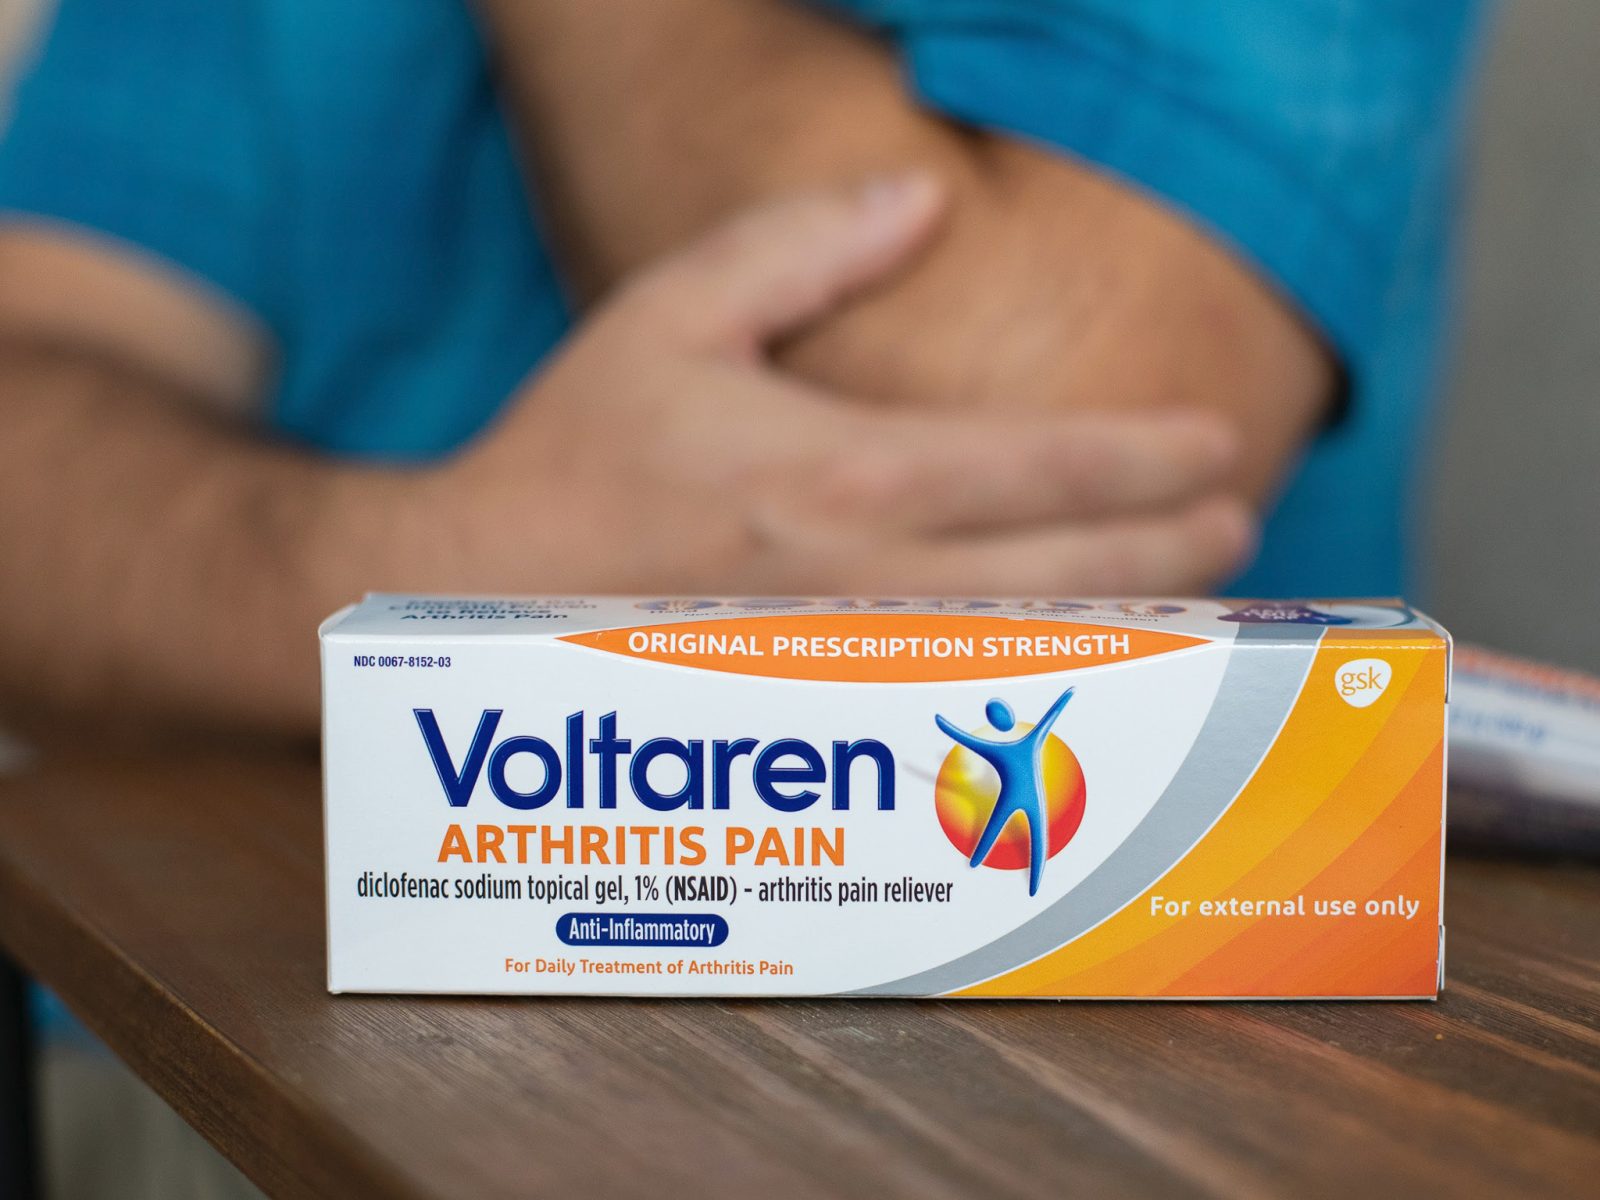 Nice Discount On Voltaren Arthritis Pain Gel At Publix – Just $5.28 (Regluar Price $10.28)